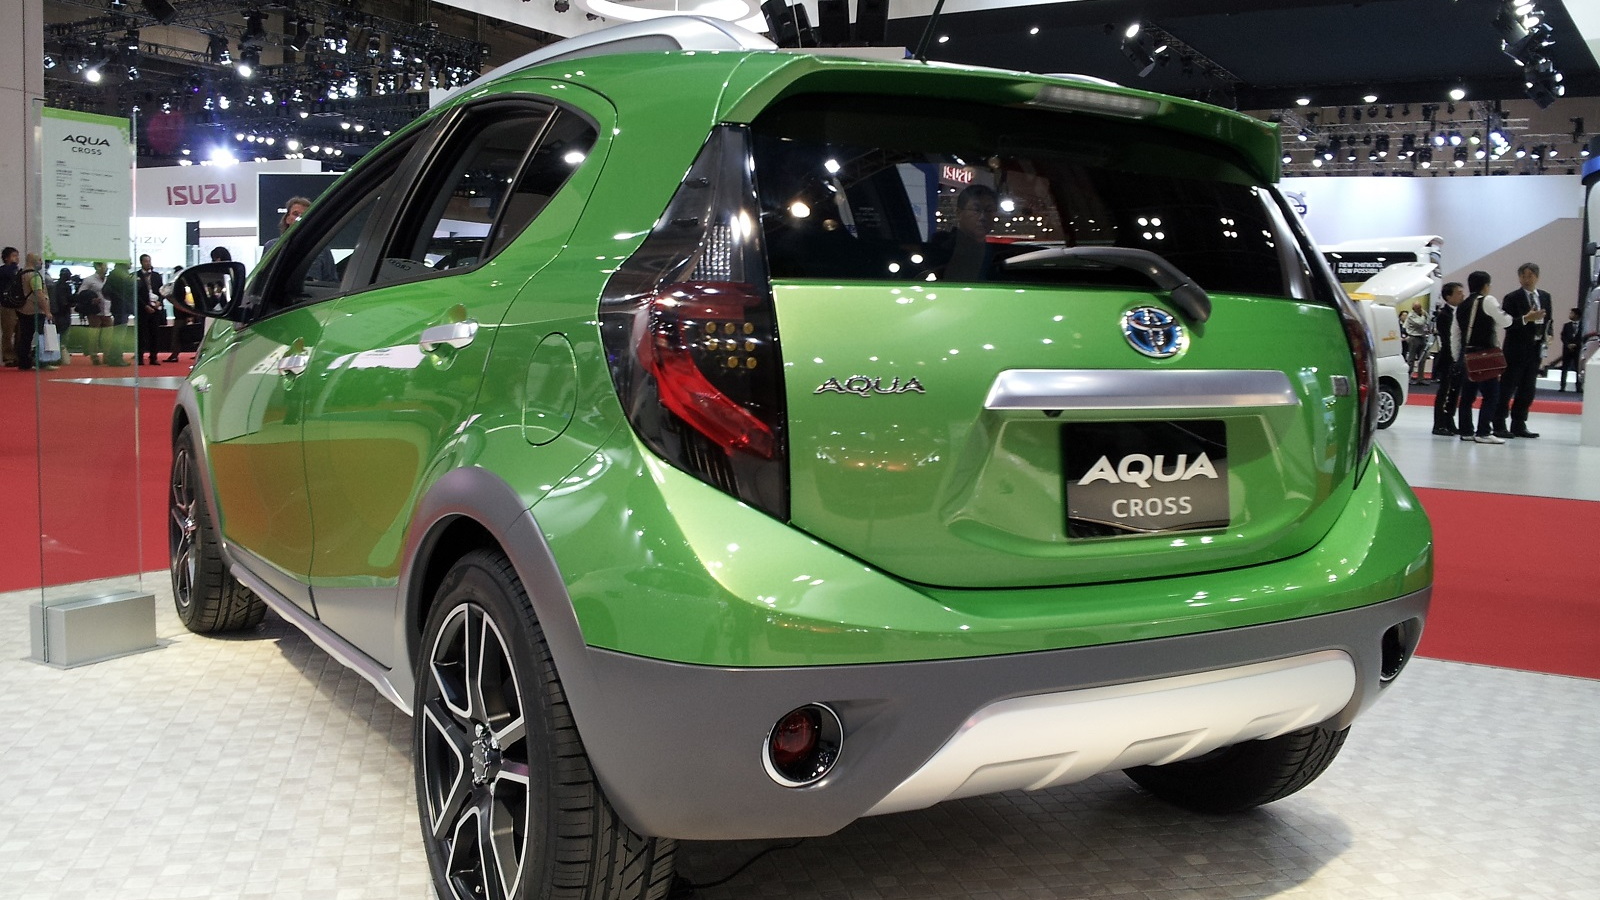 Toyota Aqua Cross Concept (Prius C) at 2013 Tokyo Motor Show